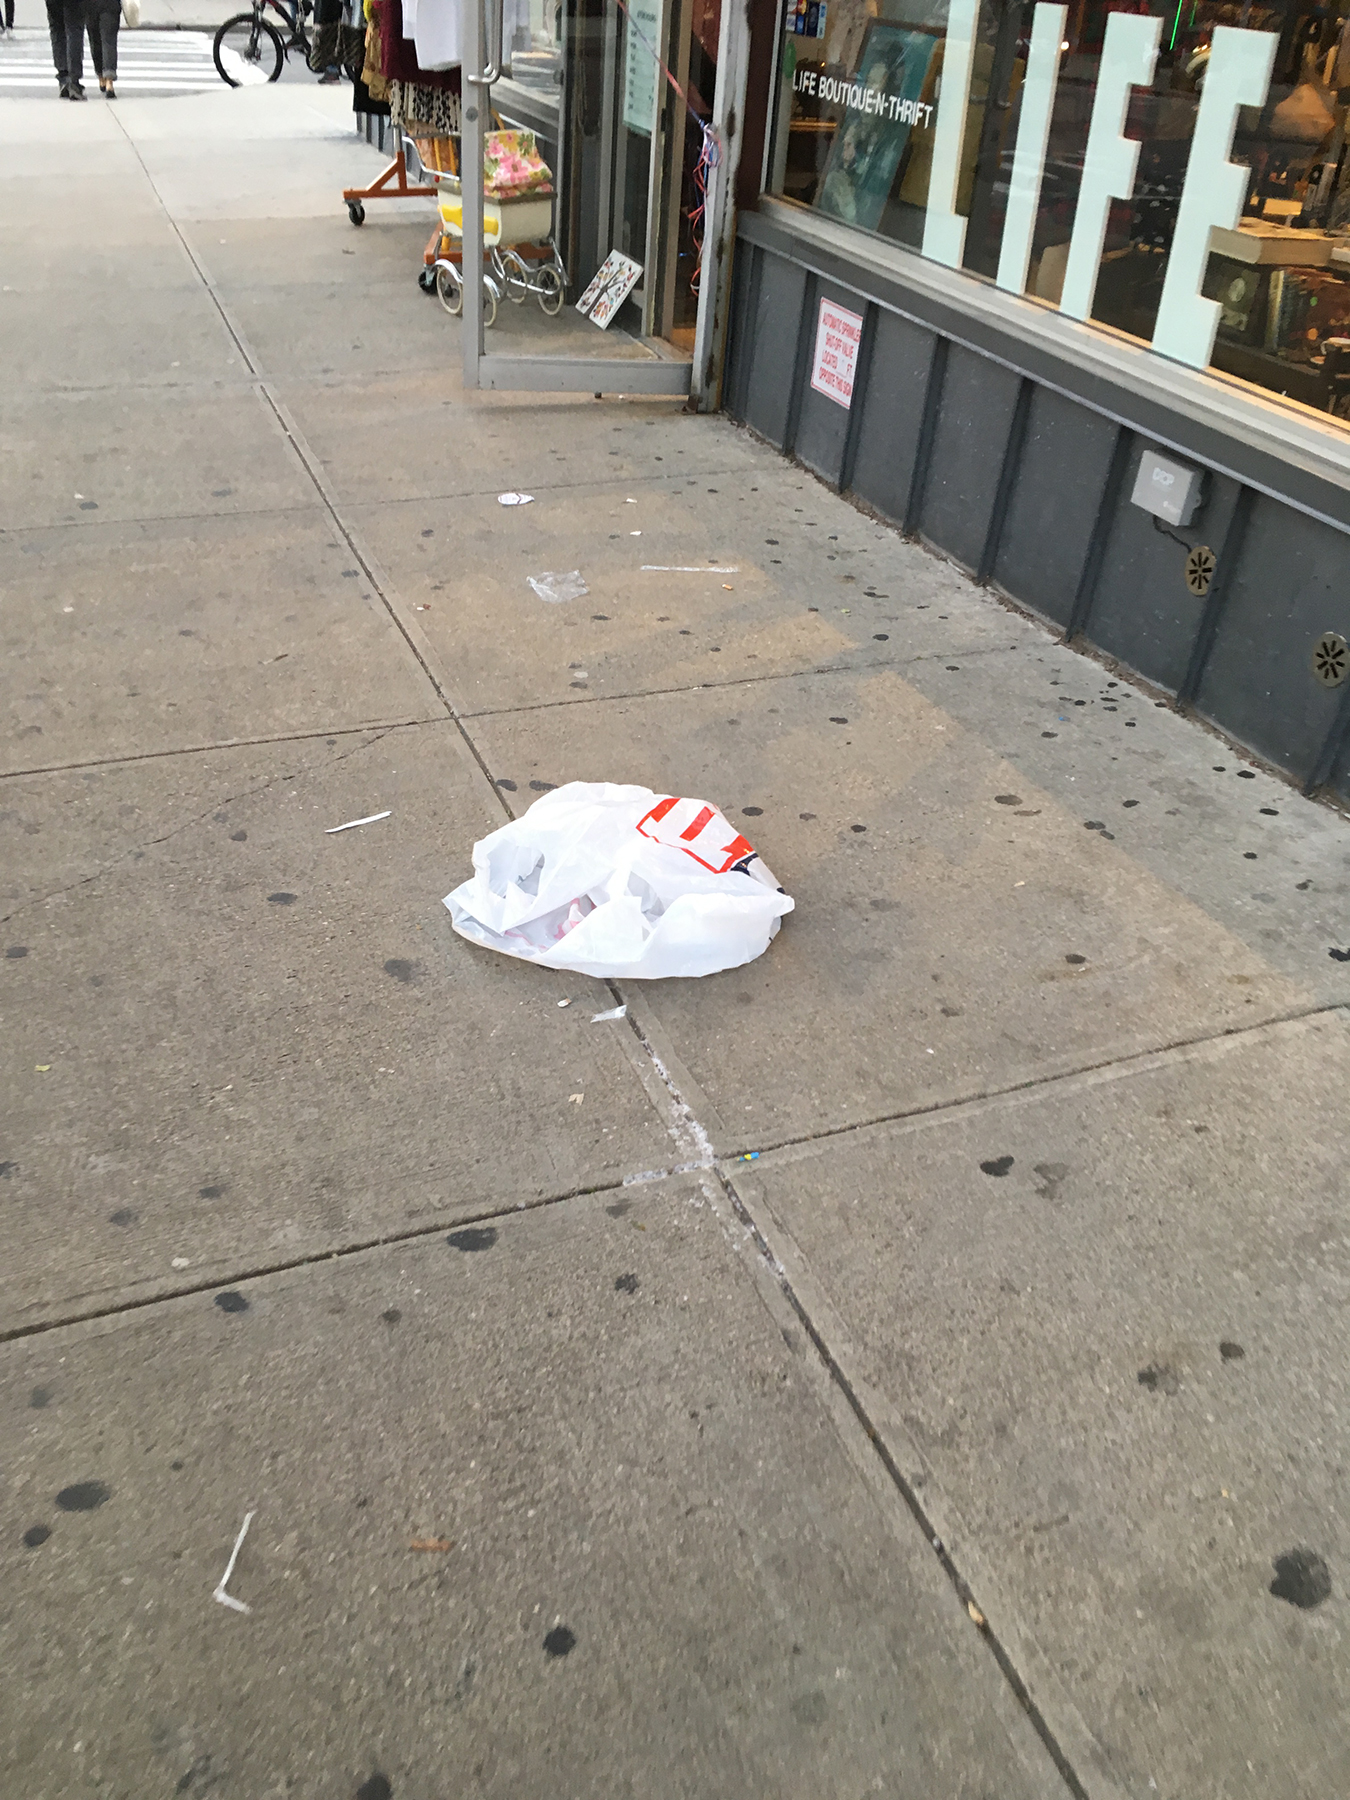 A photo of a trash bag